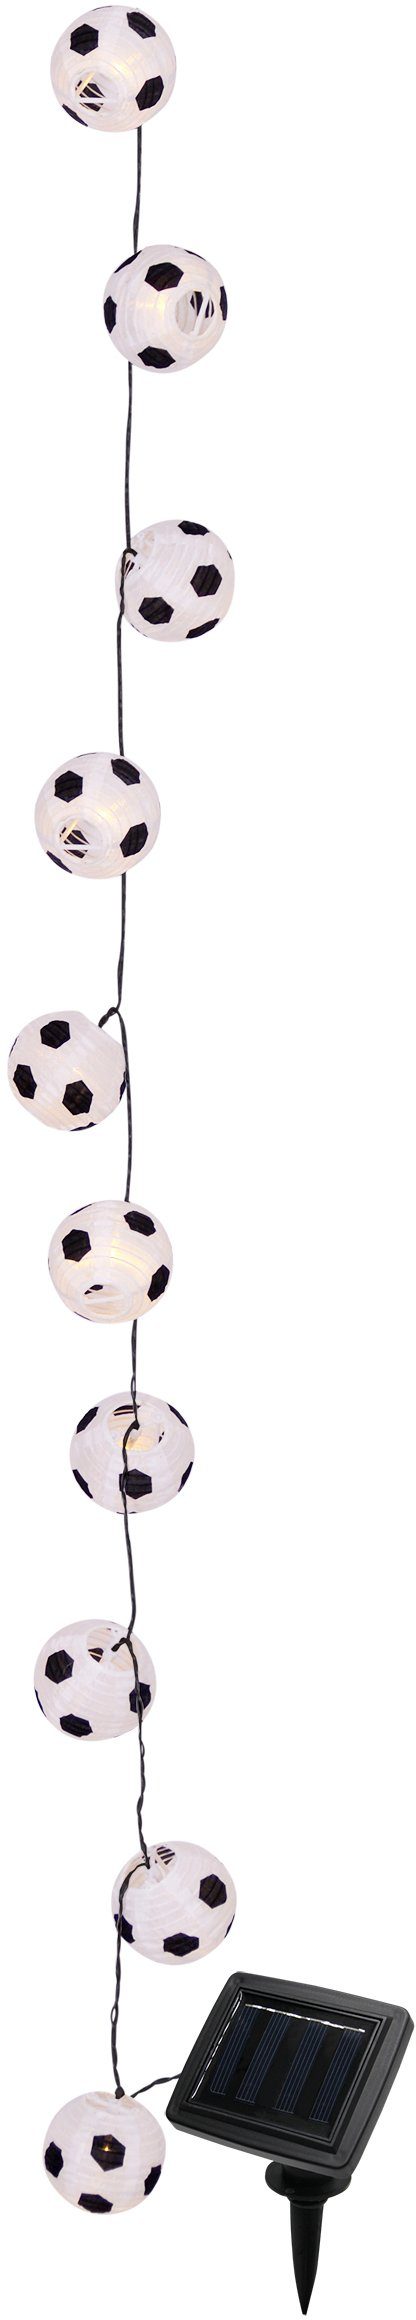 näve Lichterkette Japanballon-20er-Solar-Lichterkette, Metall, Polyester, Kunststoff, Material: Fußball, weiß/schwarz Farbe